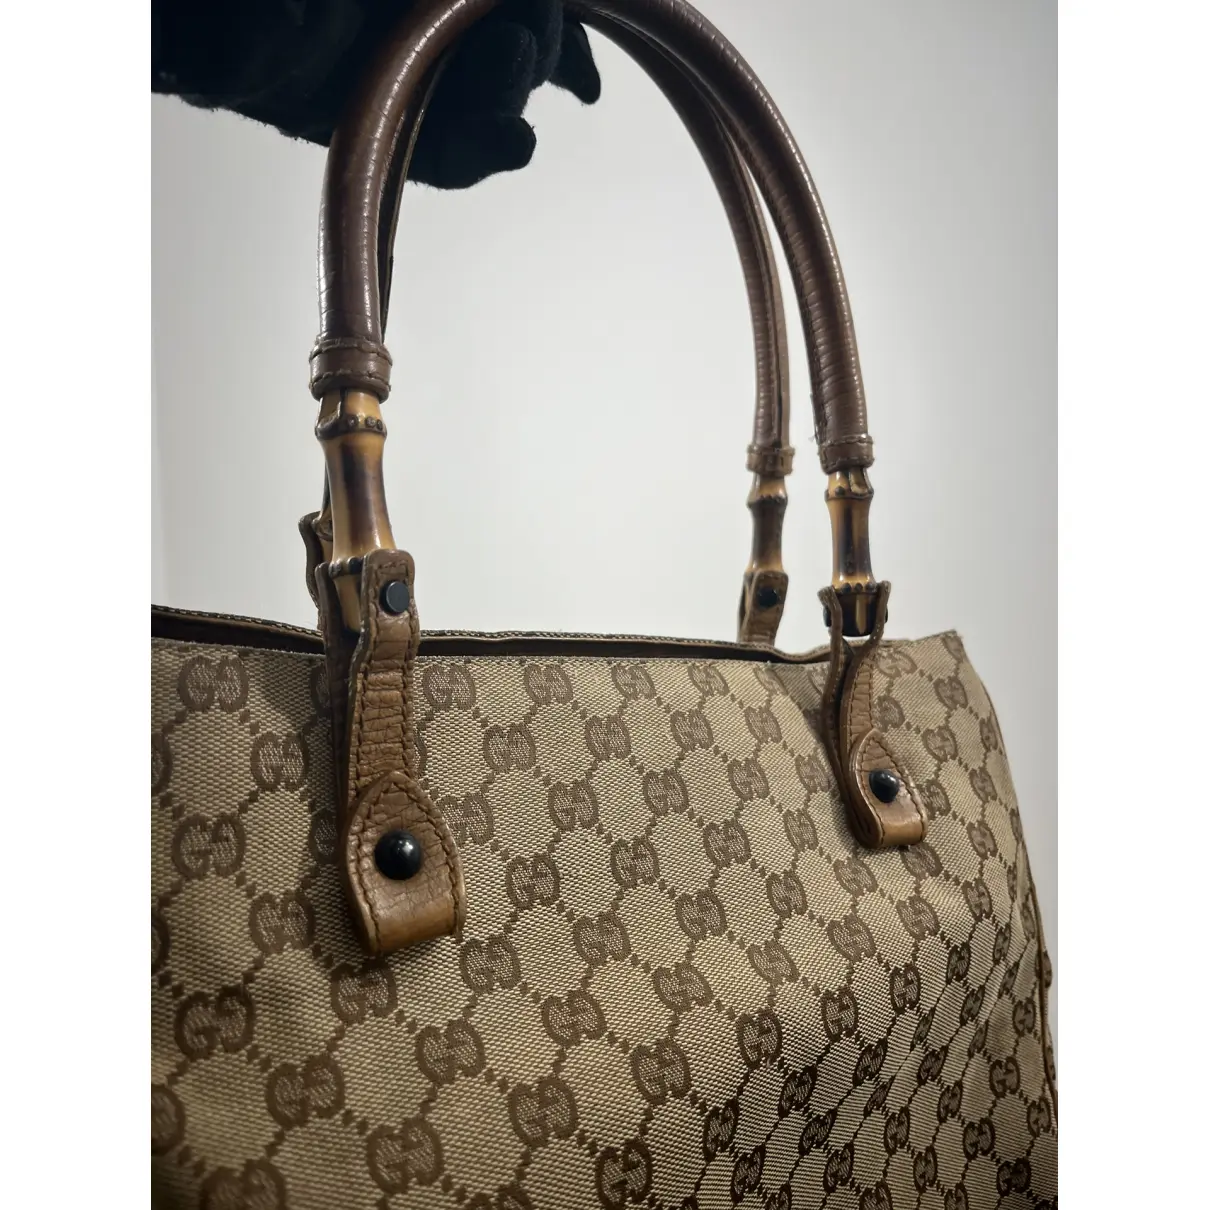 Buy Gucci Bamboo Frame Satchel cloth handbag online